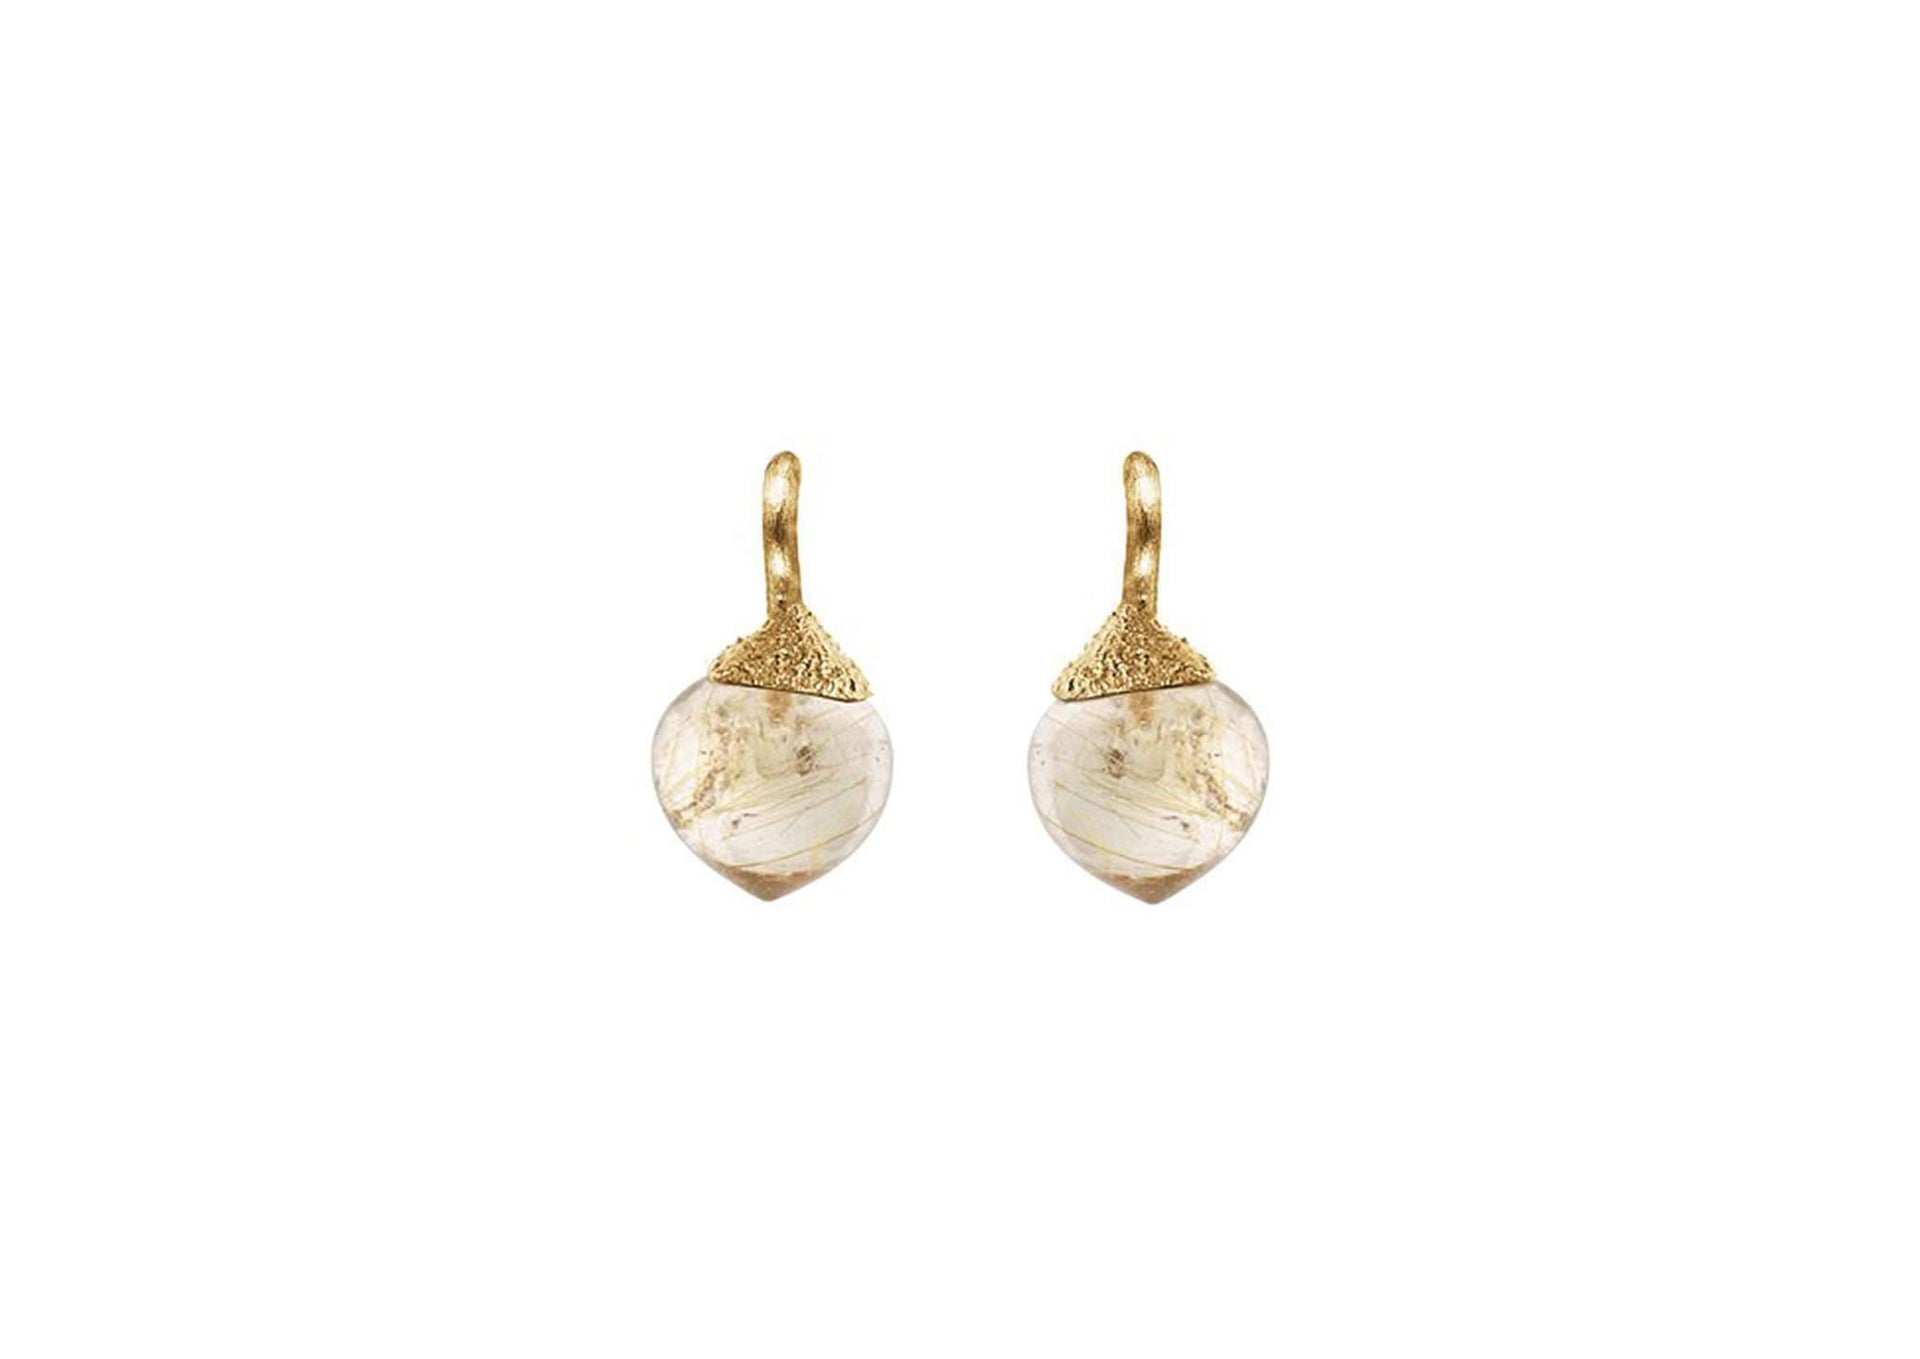 Dew Drops earrings in 18K yellow gold with rutile quartz